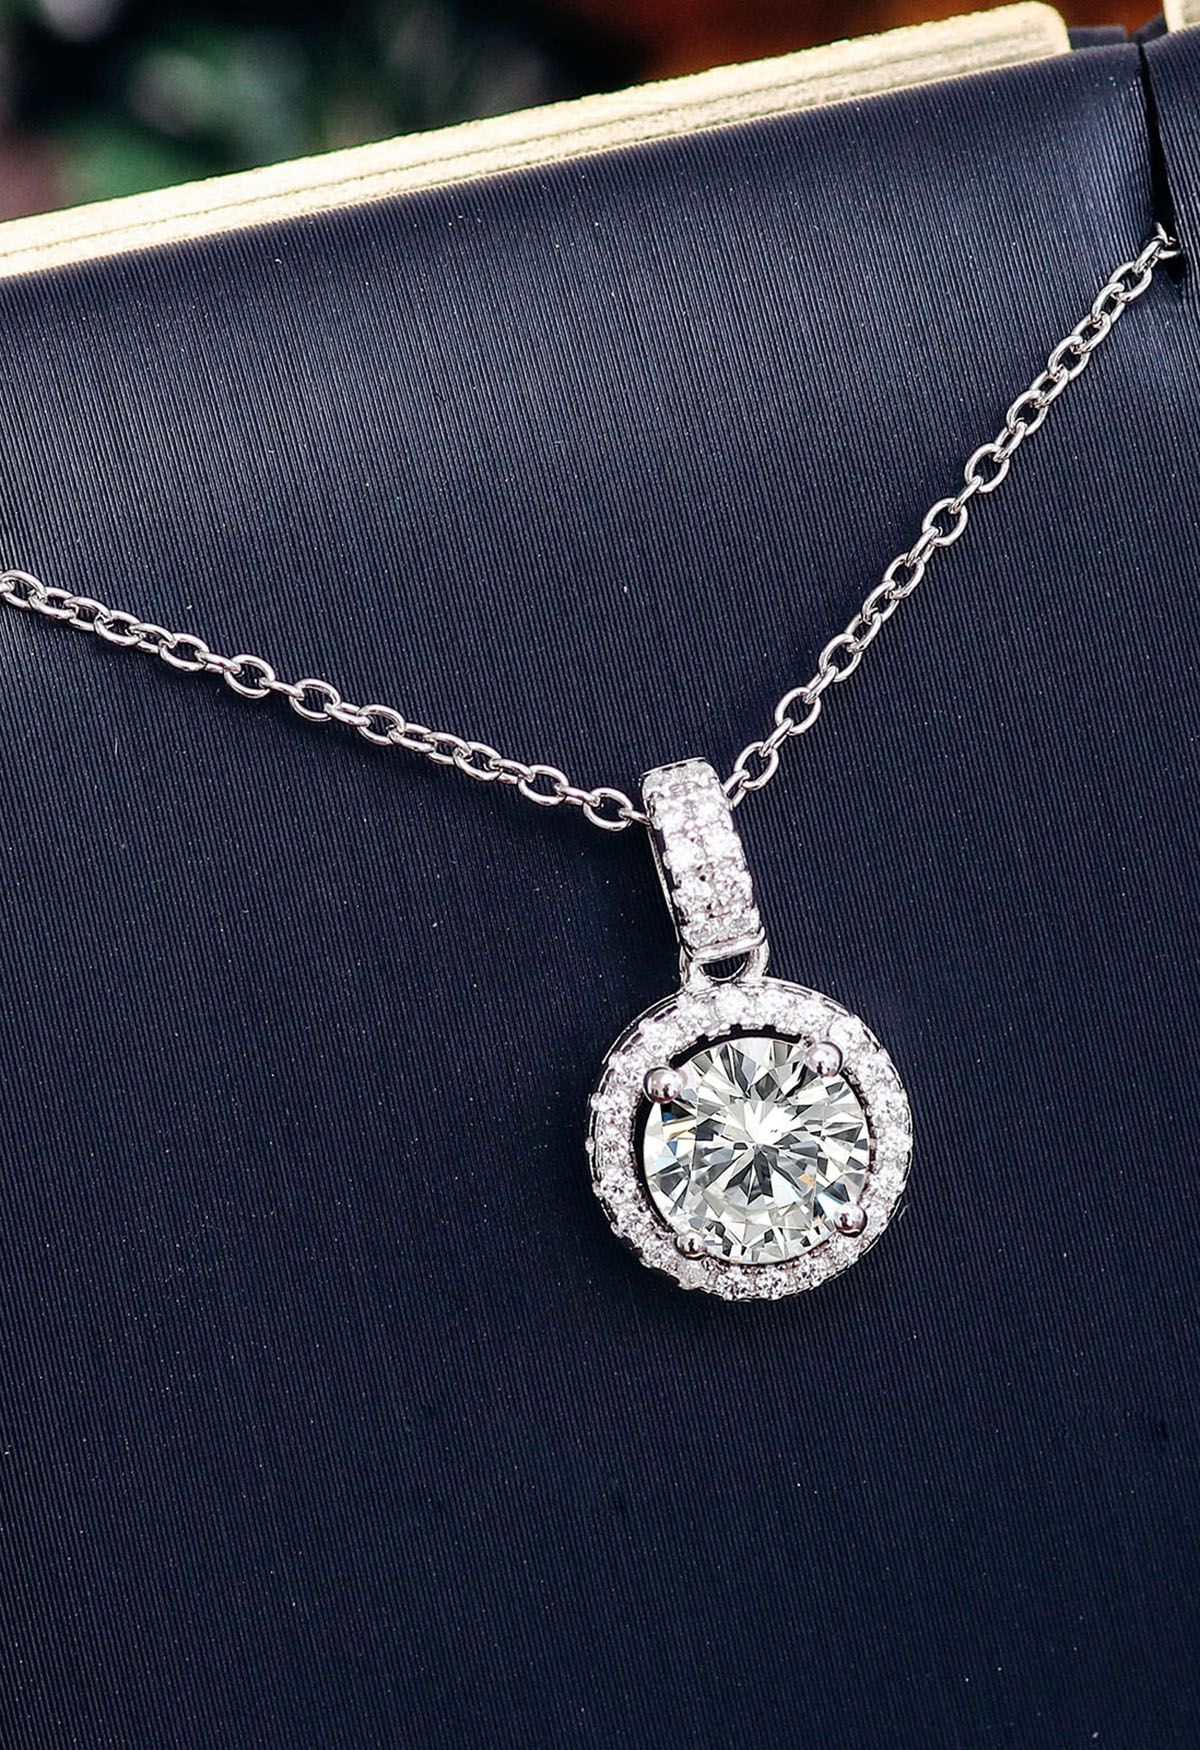 Round Cut Moissanite Diamond Necklace - Retro, Indie and Unique Fashion